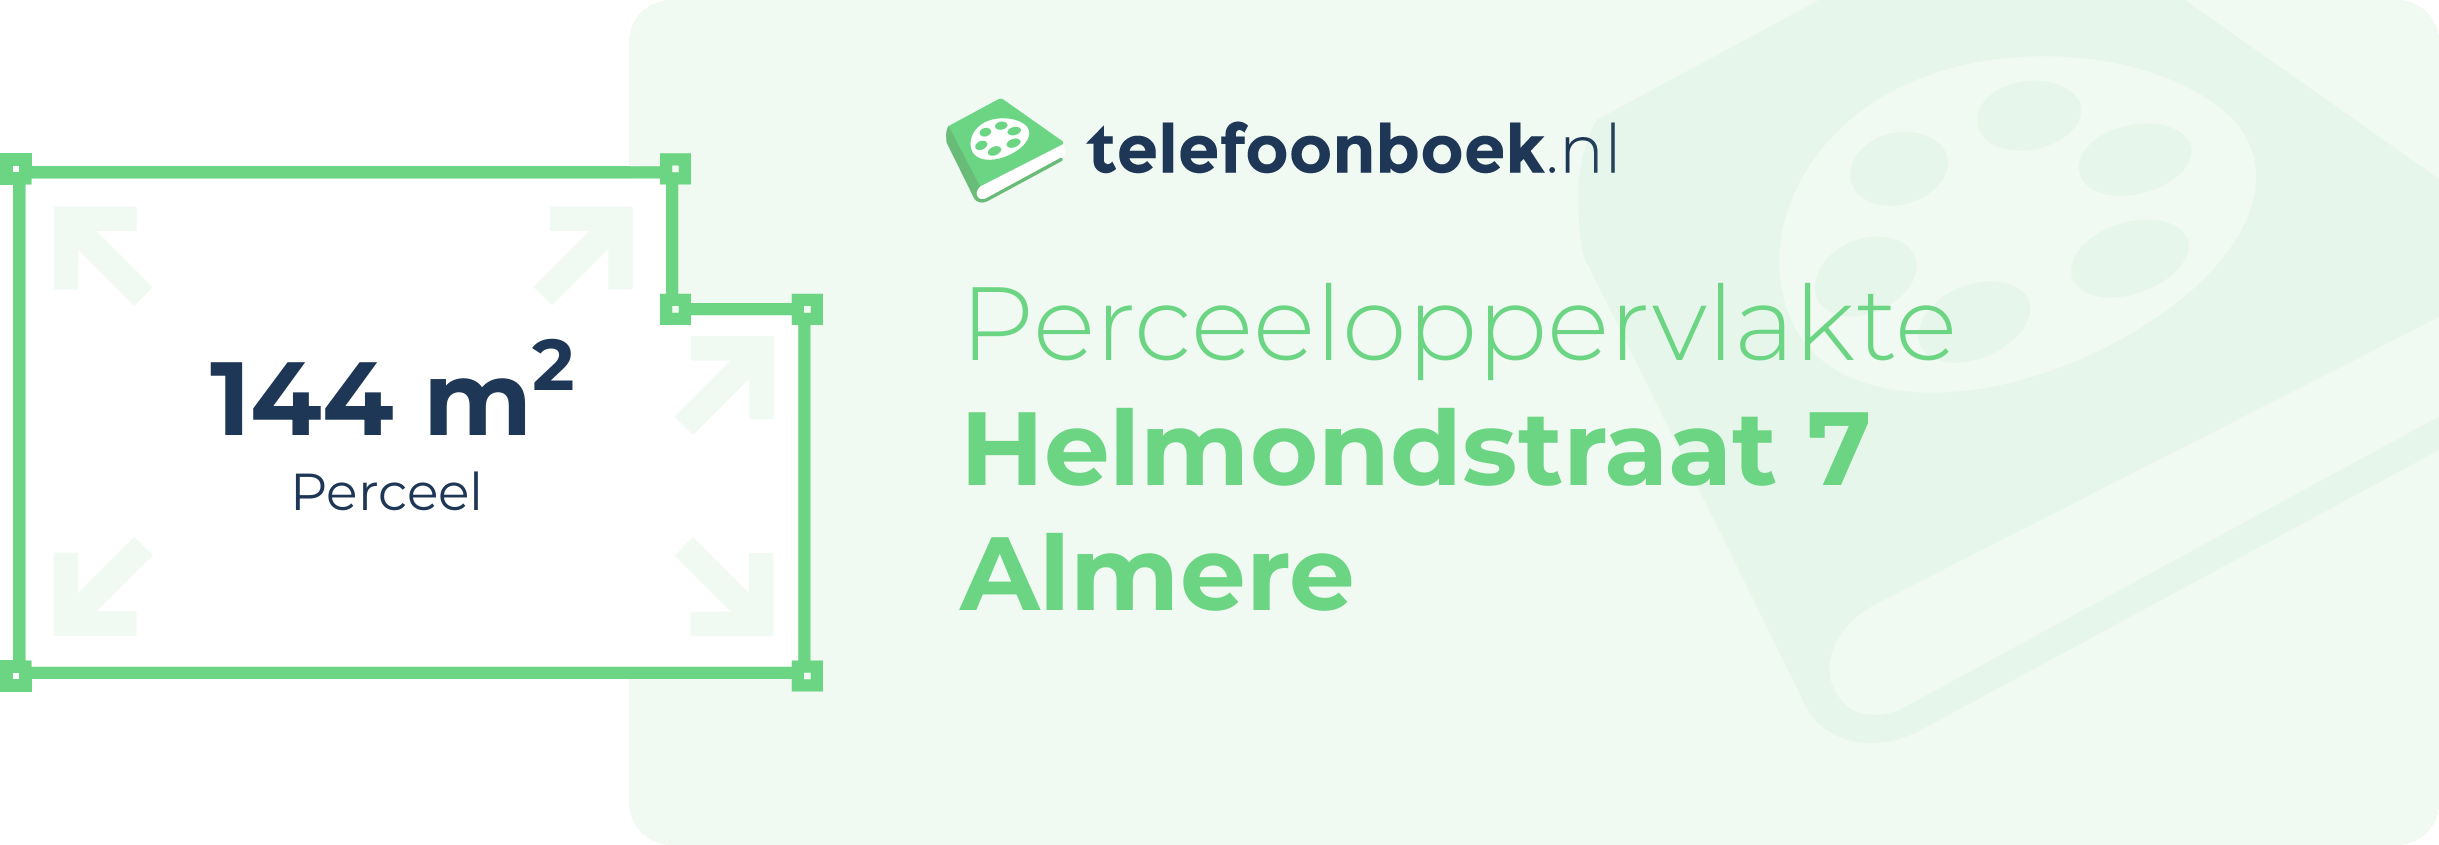 Perceeloppervlakte Helmondstraat 7 Almere